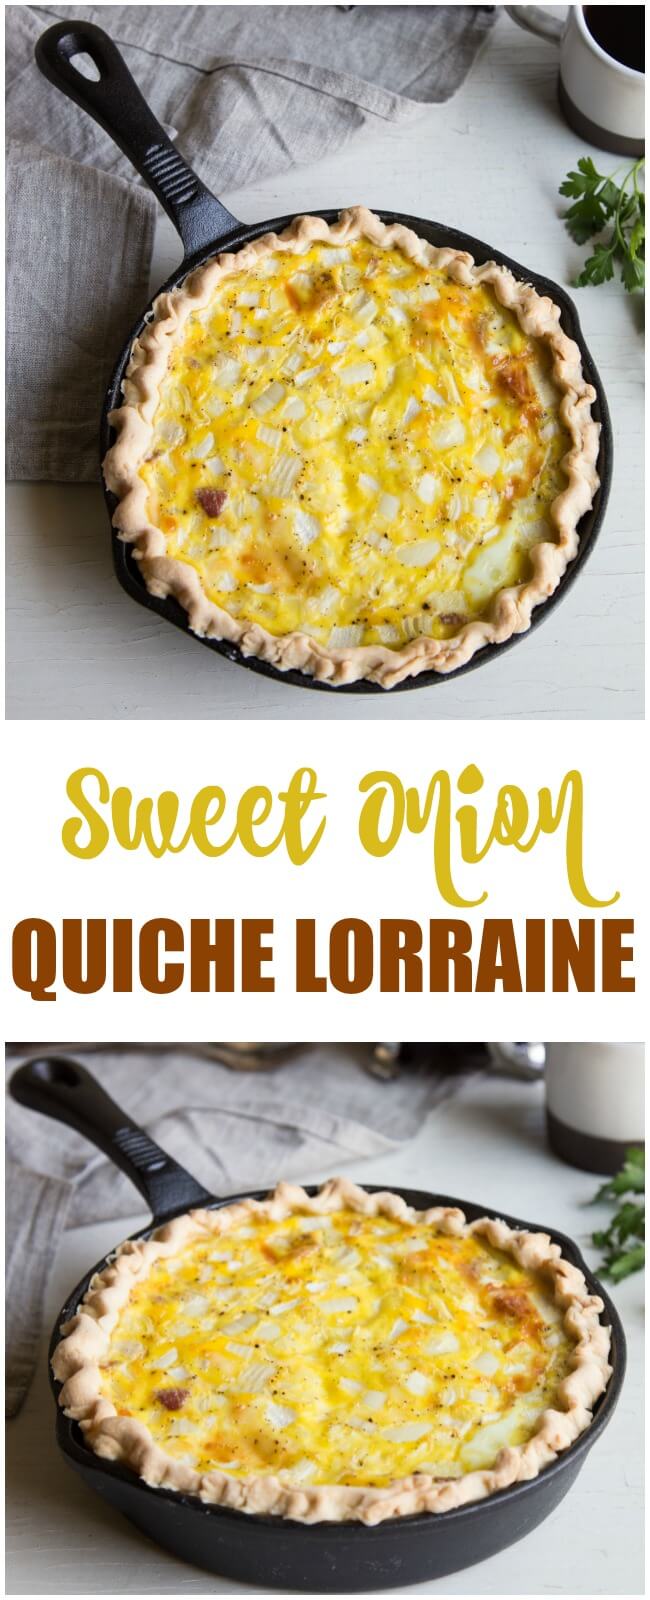 Sweet Onion Quiche Lorraine - National Onion Association